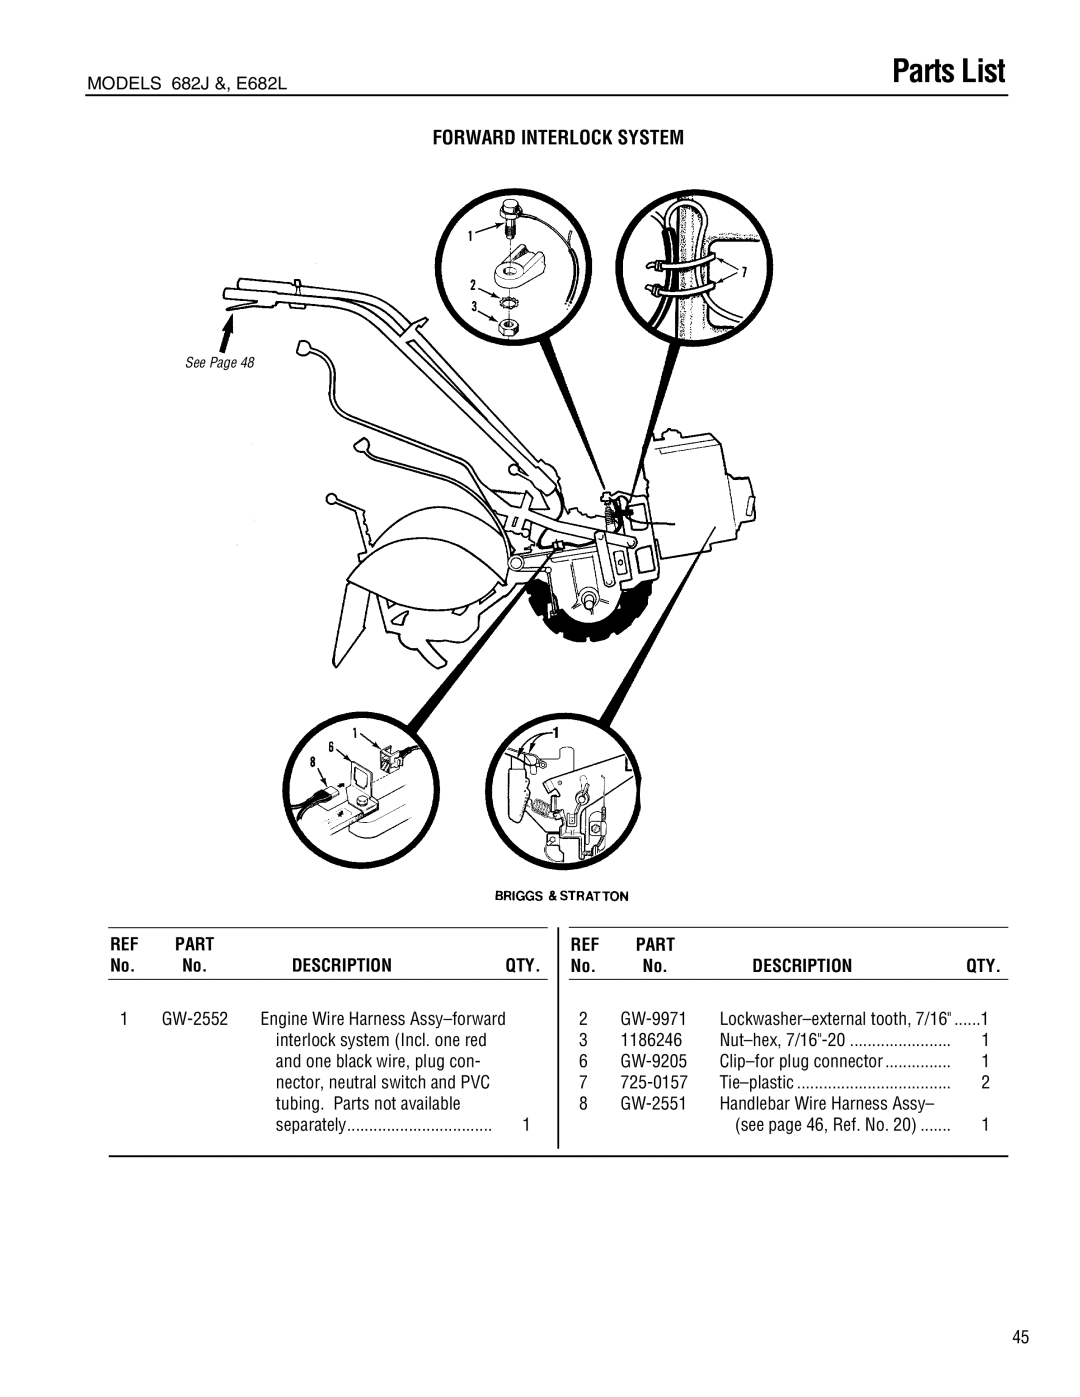 Troy-Bilt E682J-Horse manual Parts List, Forward Interlock System, Description 